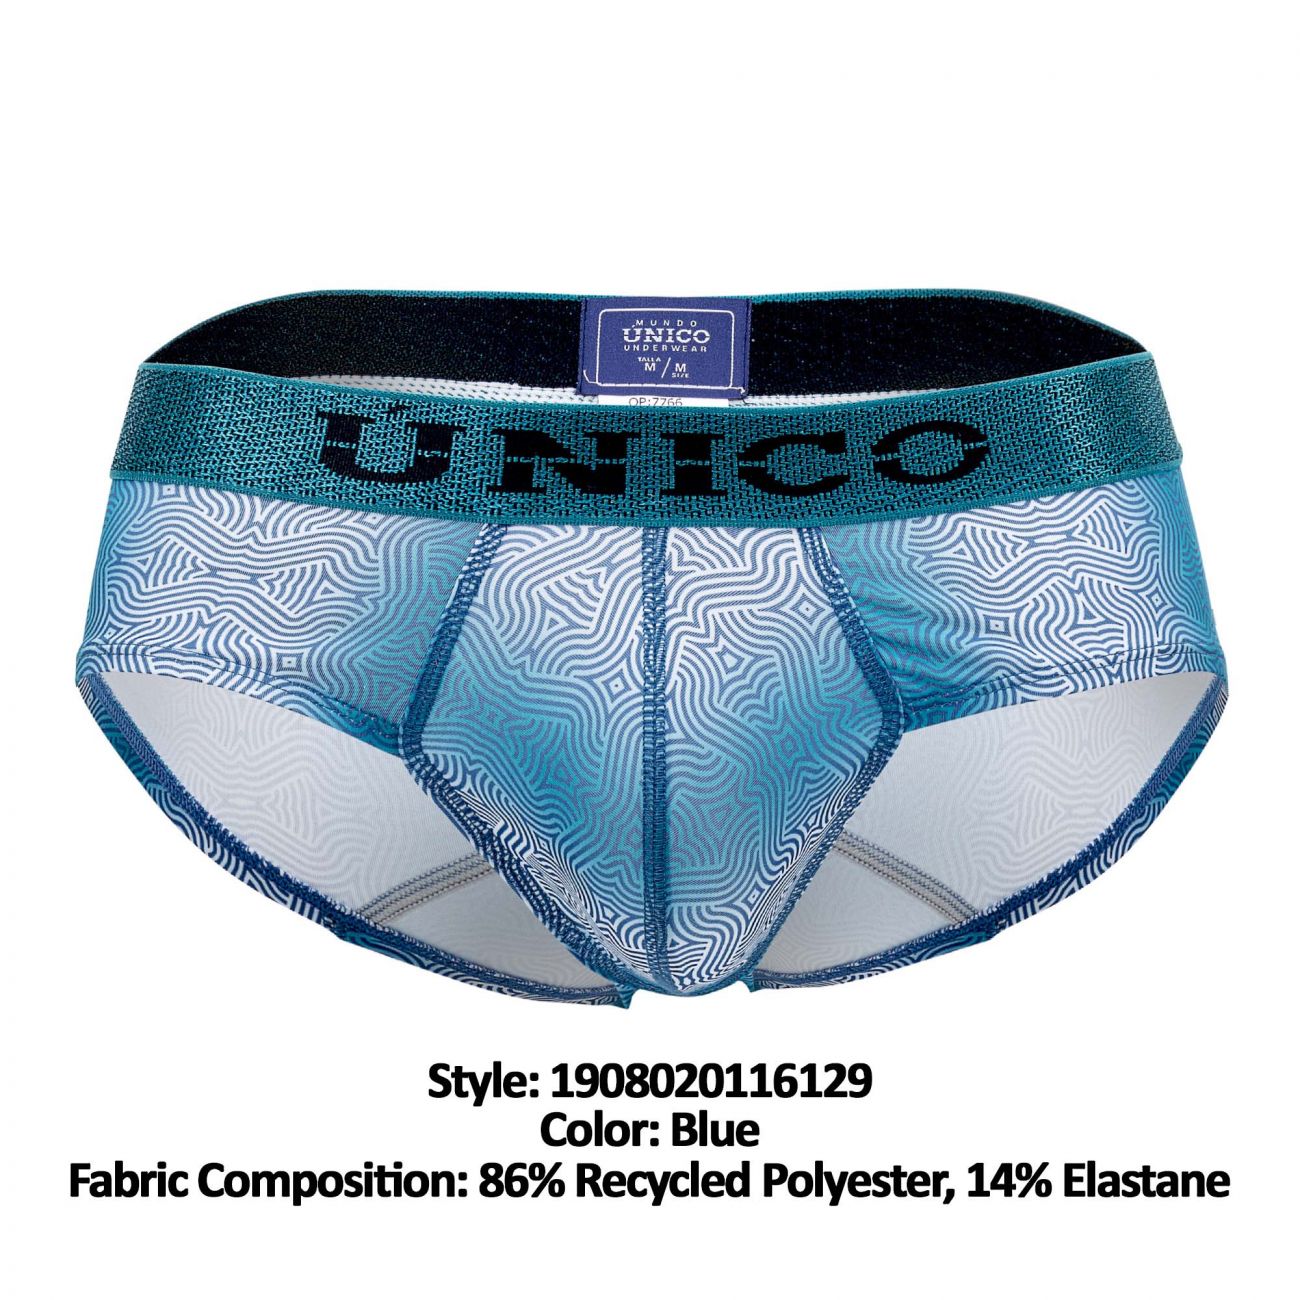 Unico 1908020116129 Briefs Luminiscente Blue Printed